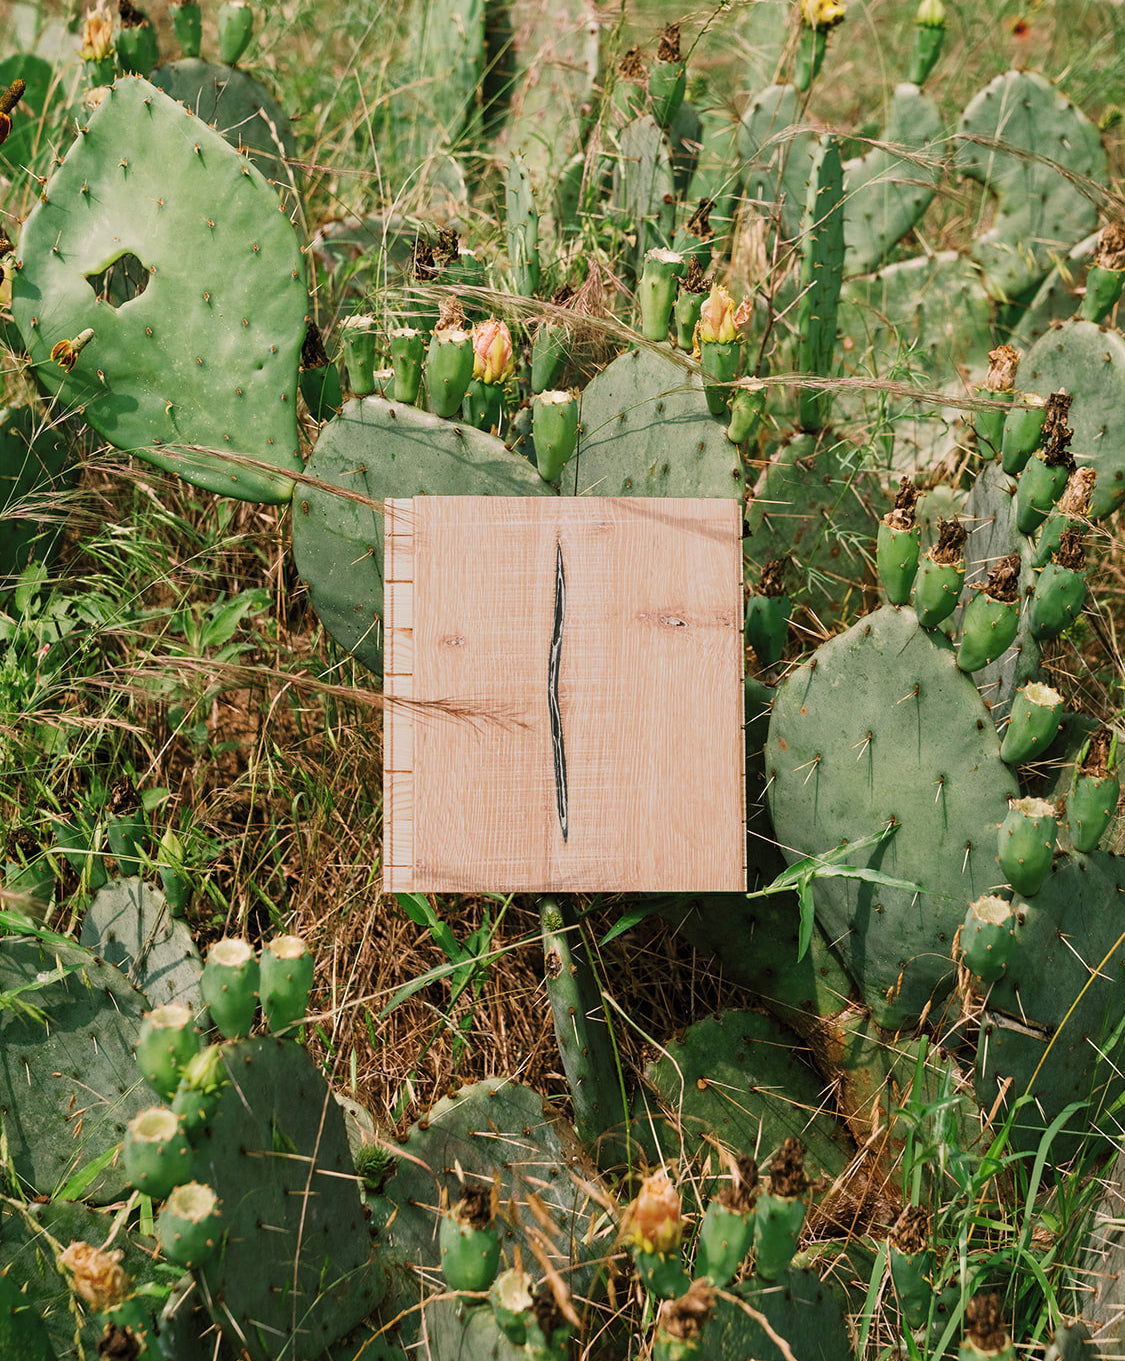 Pepper rustic wood flooring sample in a prickly pear cactus